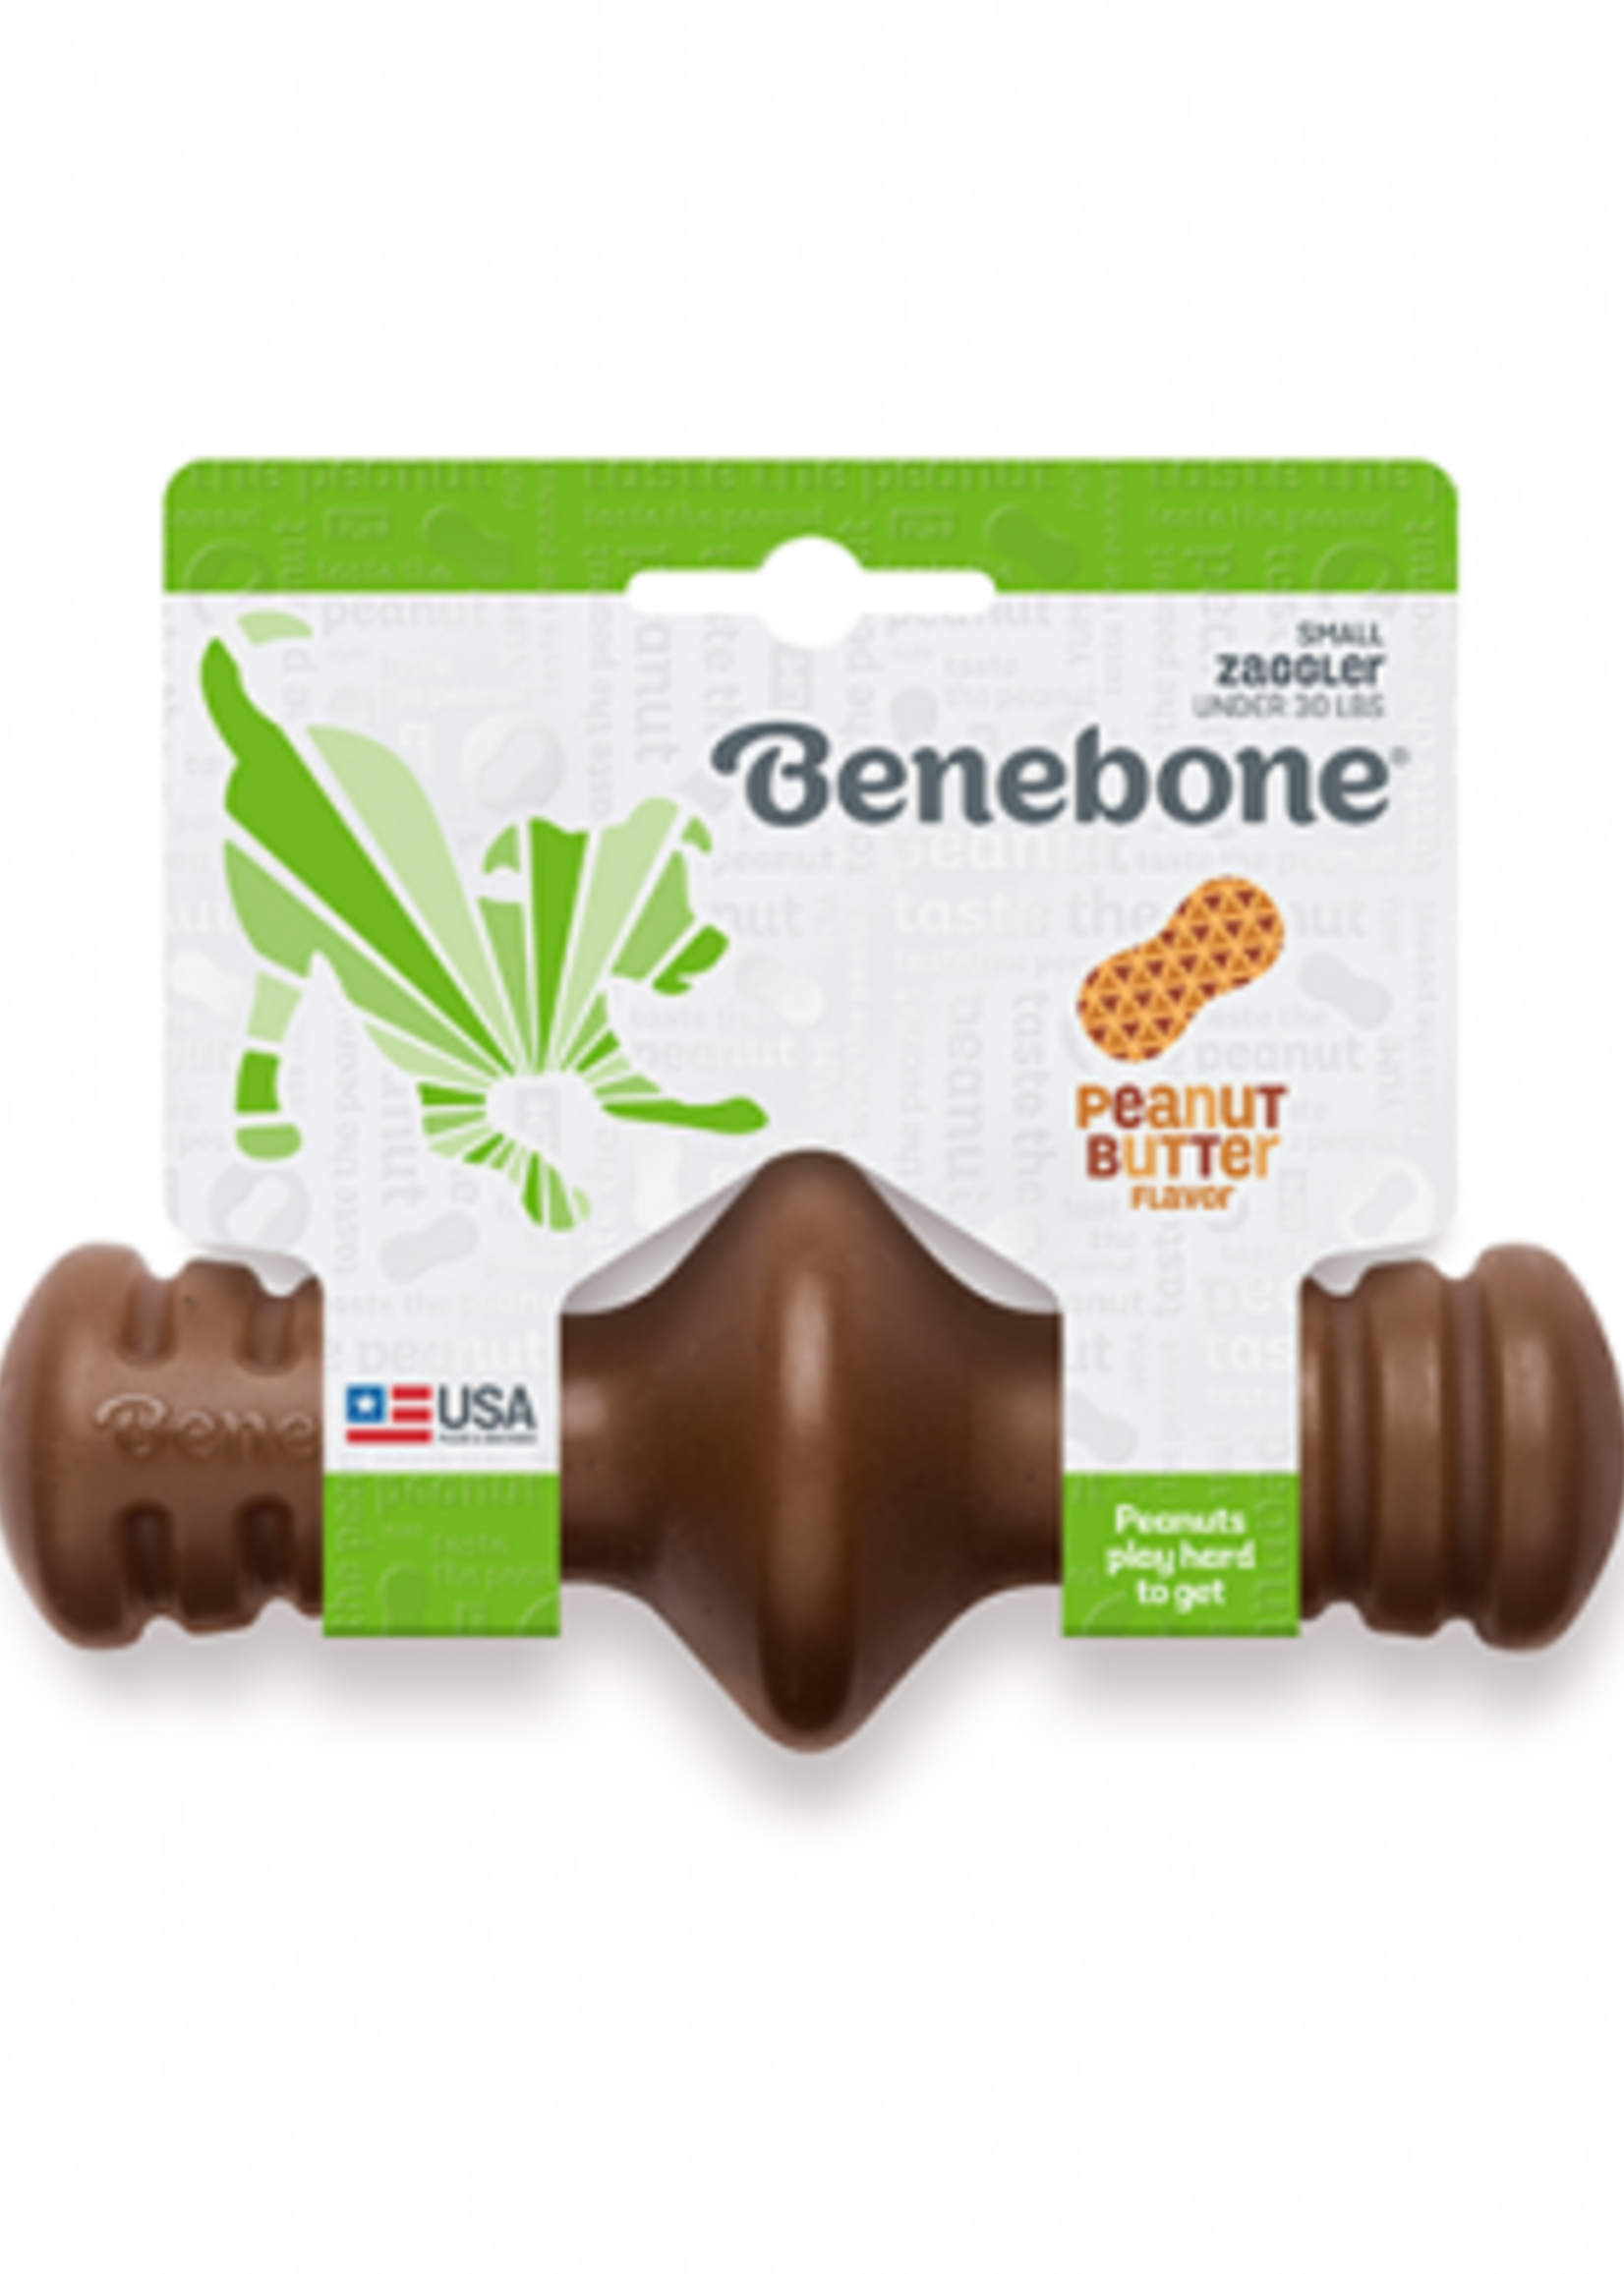 Benebone® Benebone® Zaggler Peanut Butter Flavor Small